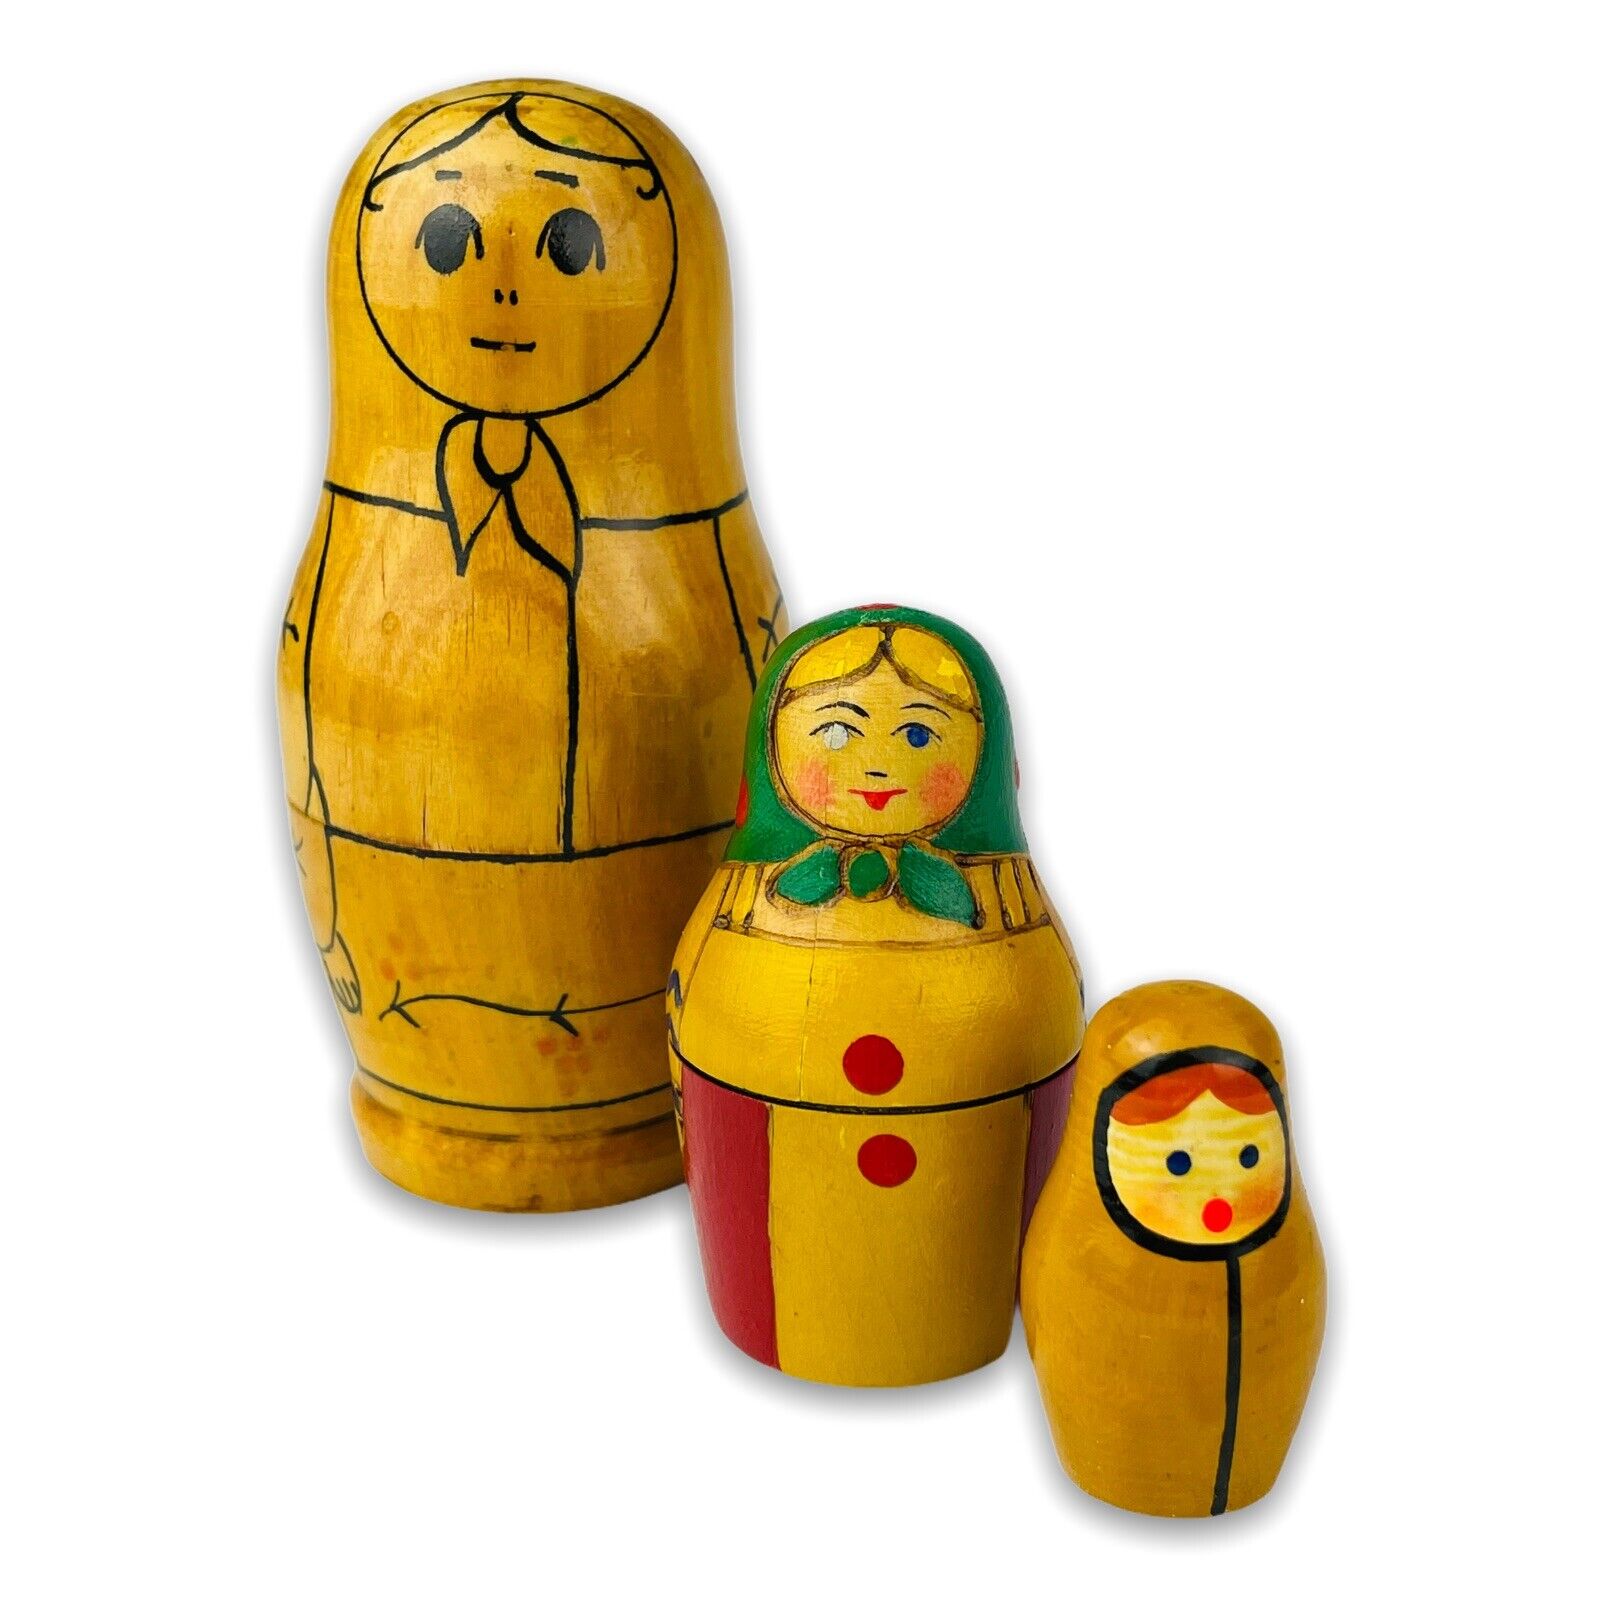 Vintage Matryoshka Russian Wooden Nesting Dolls Set of 3 Handmade